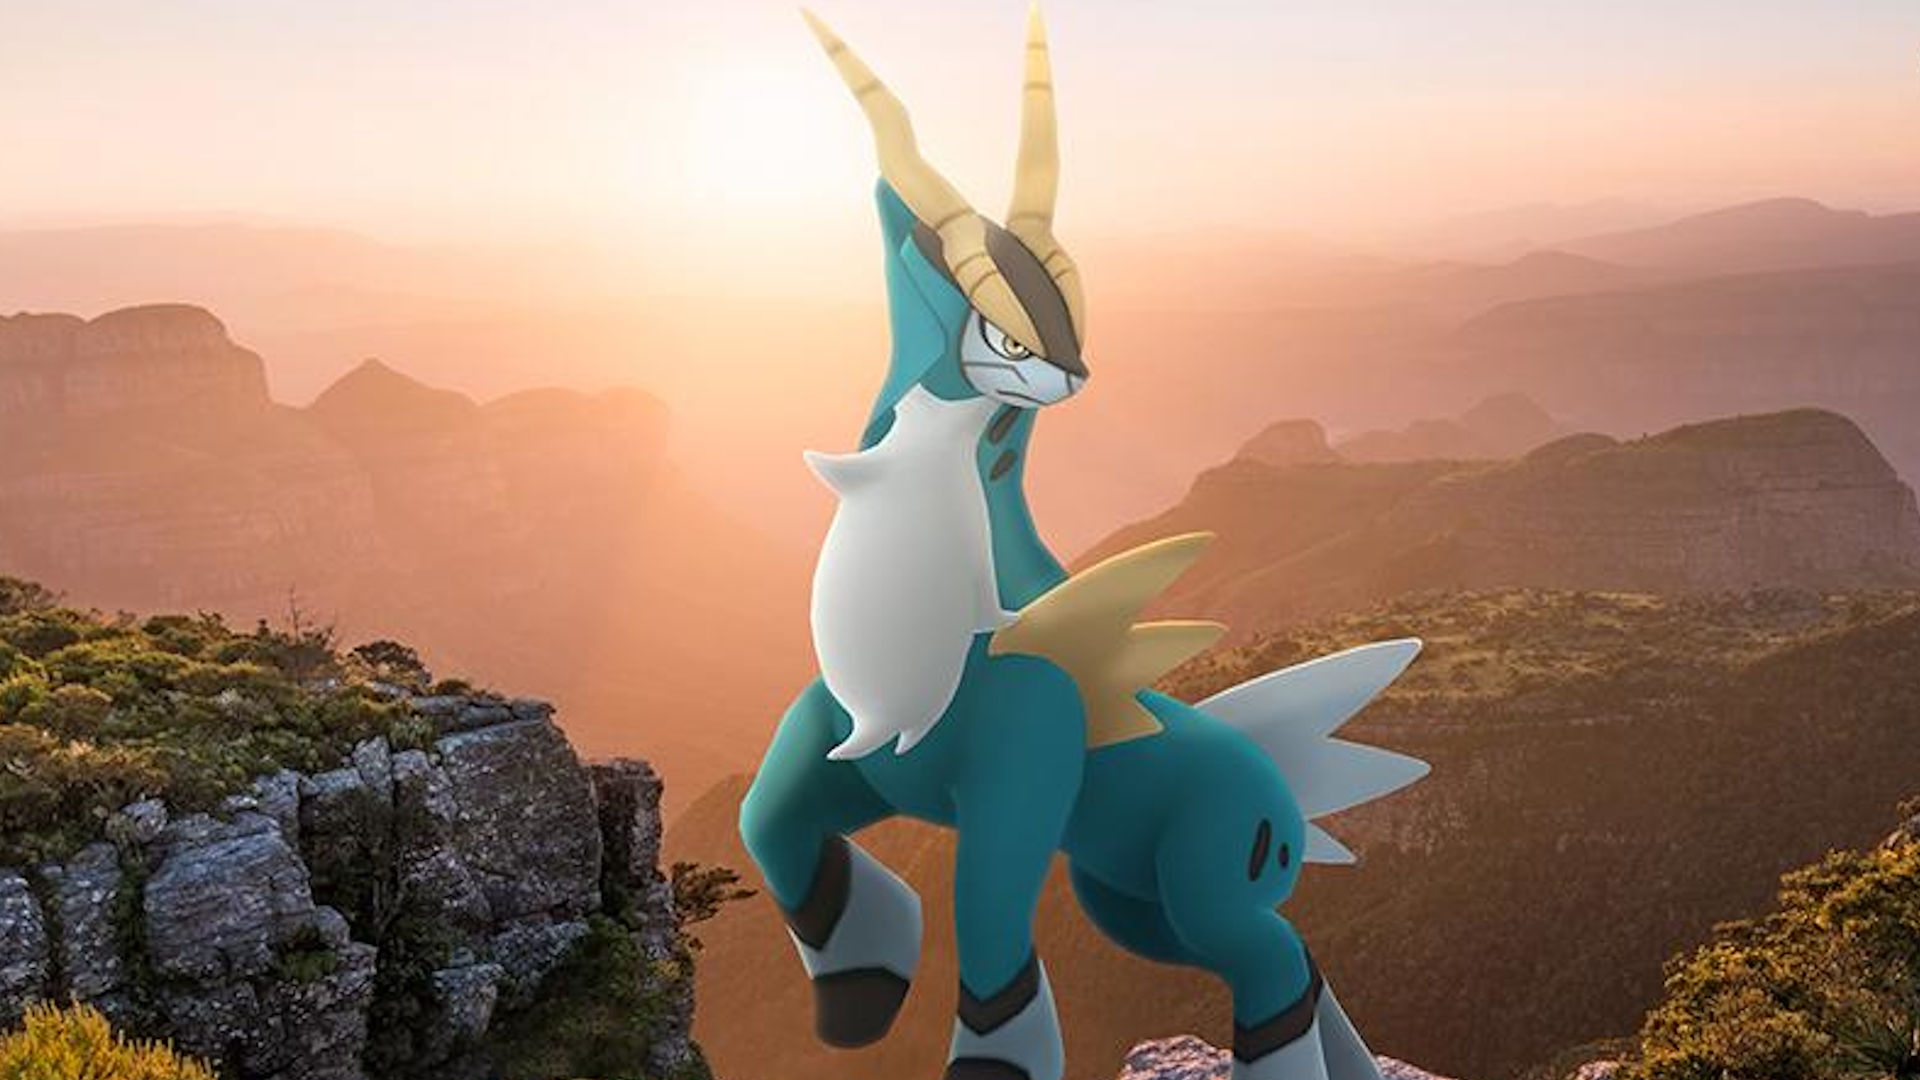 Best mobile multiplayer games: Pokémon GO. Image shows a legendary Pokémon in a mountainous area. 